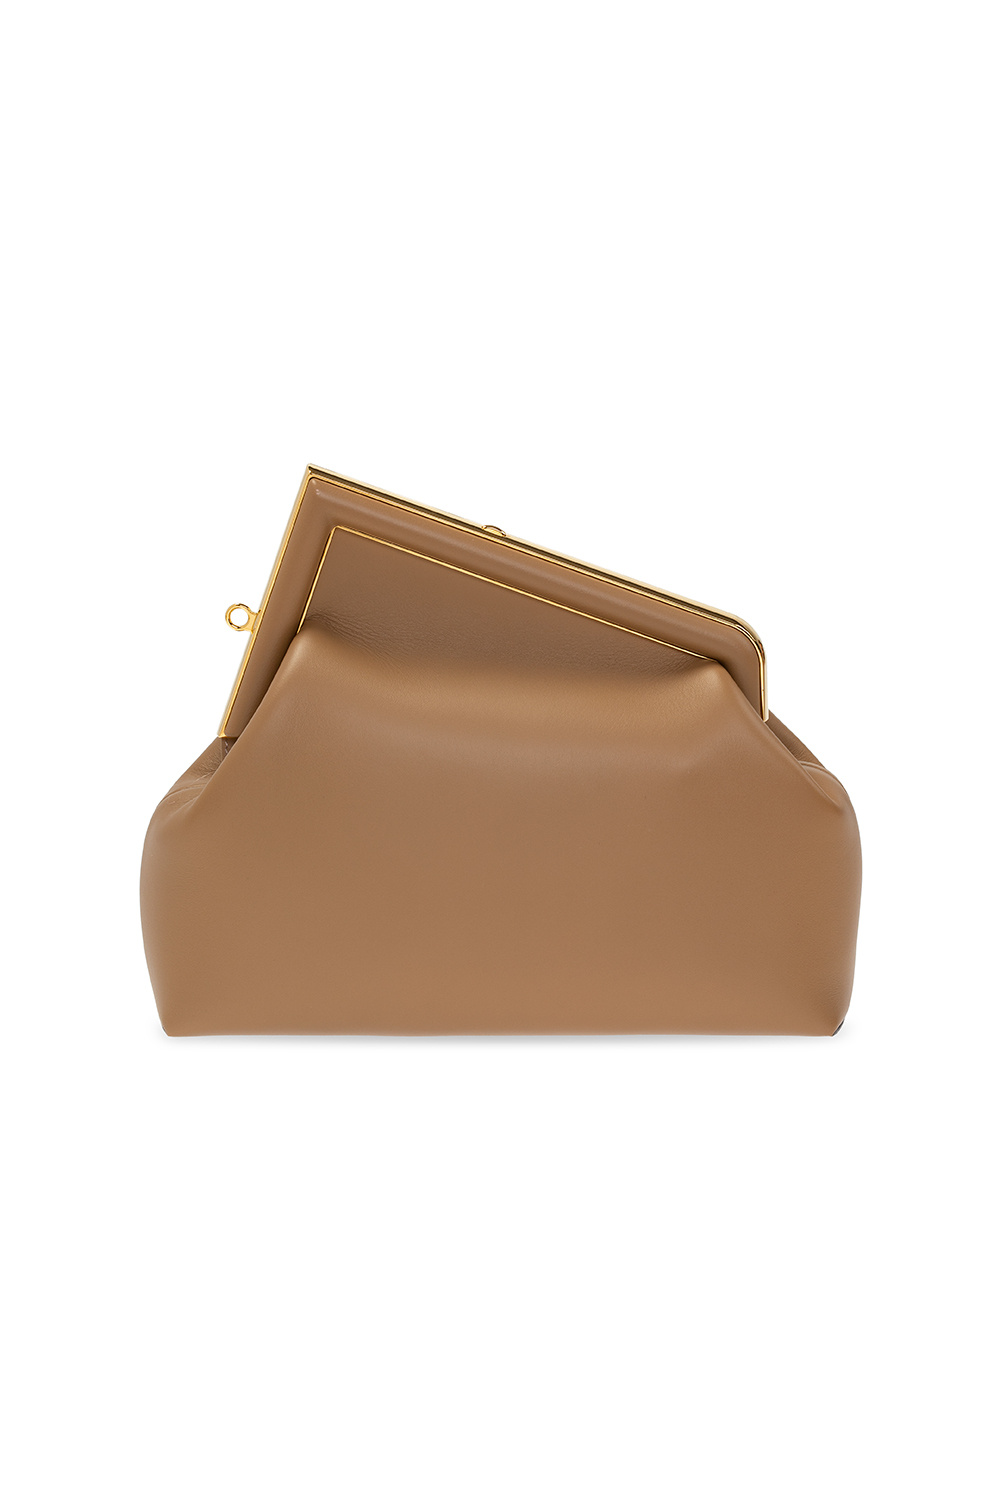 Fendi First Medium Leather Shoulder Bag Women's Brown